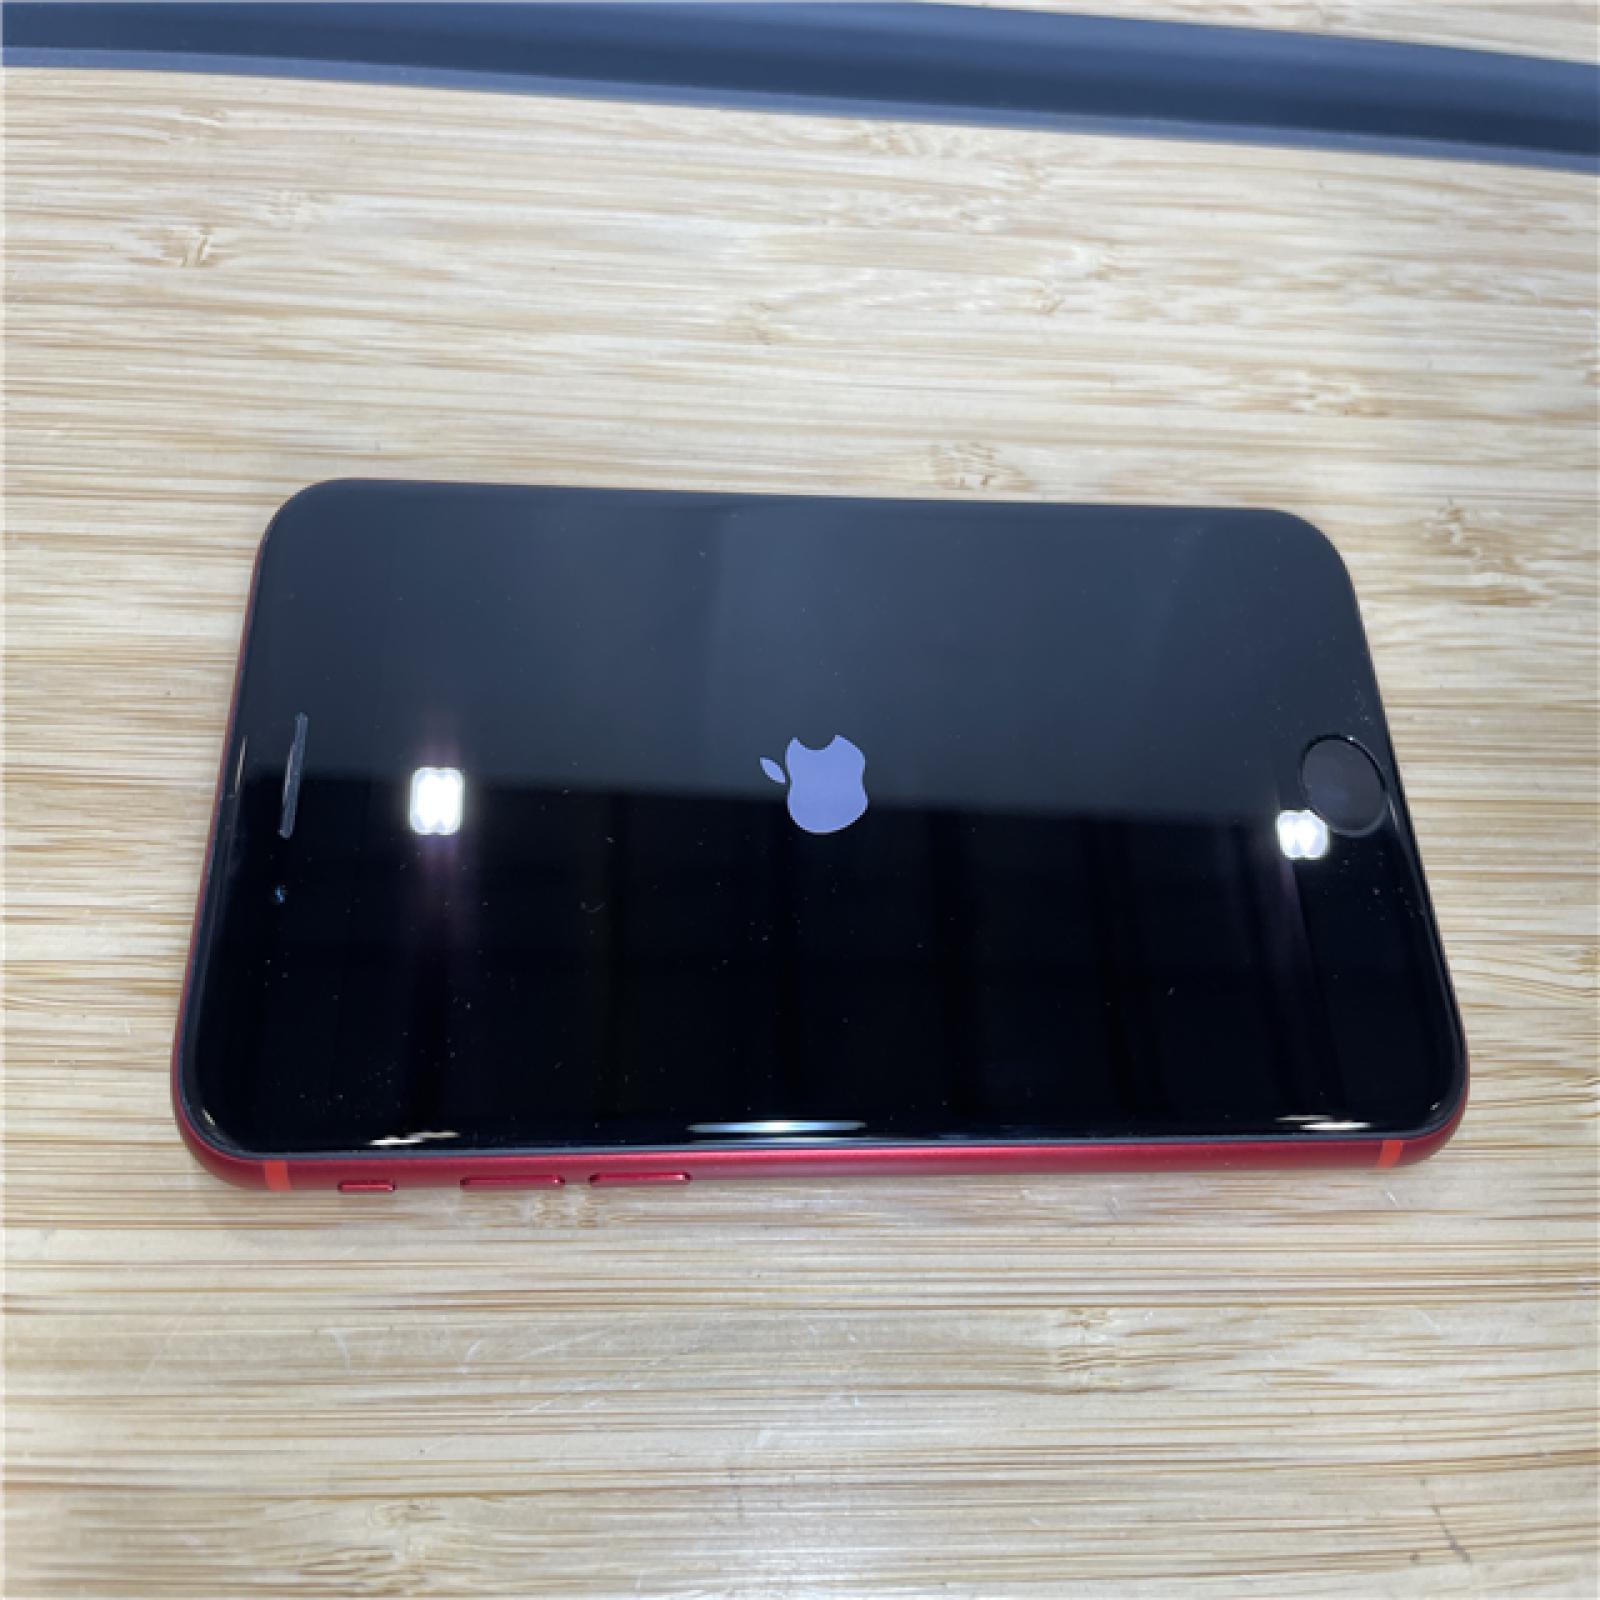 Apple iPhone SE 128GB - RED